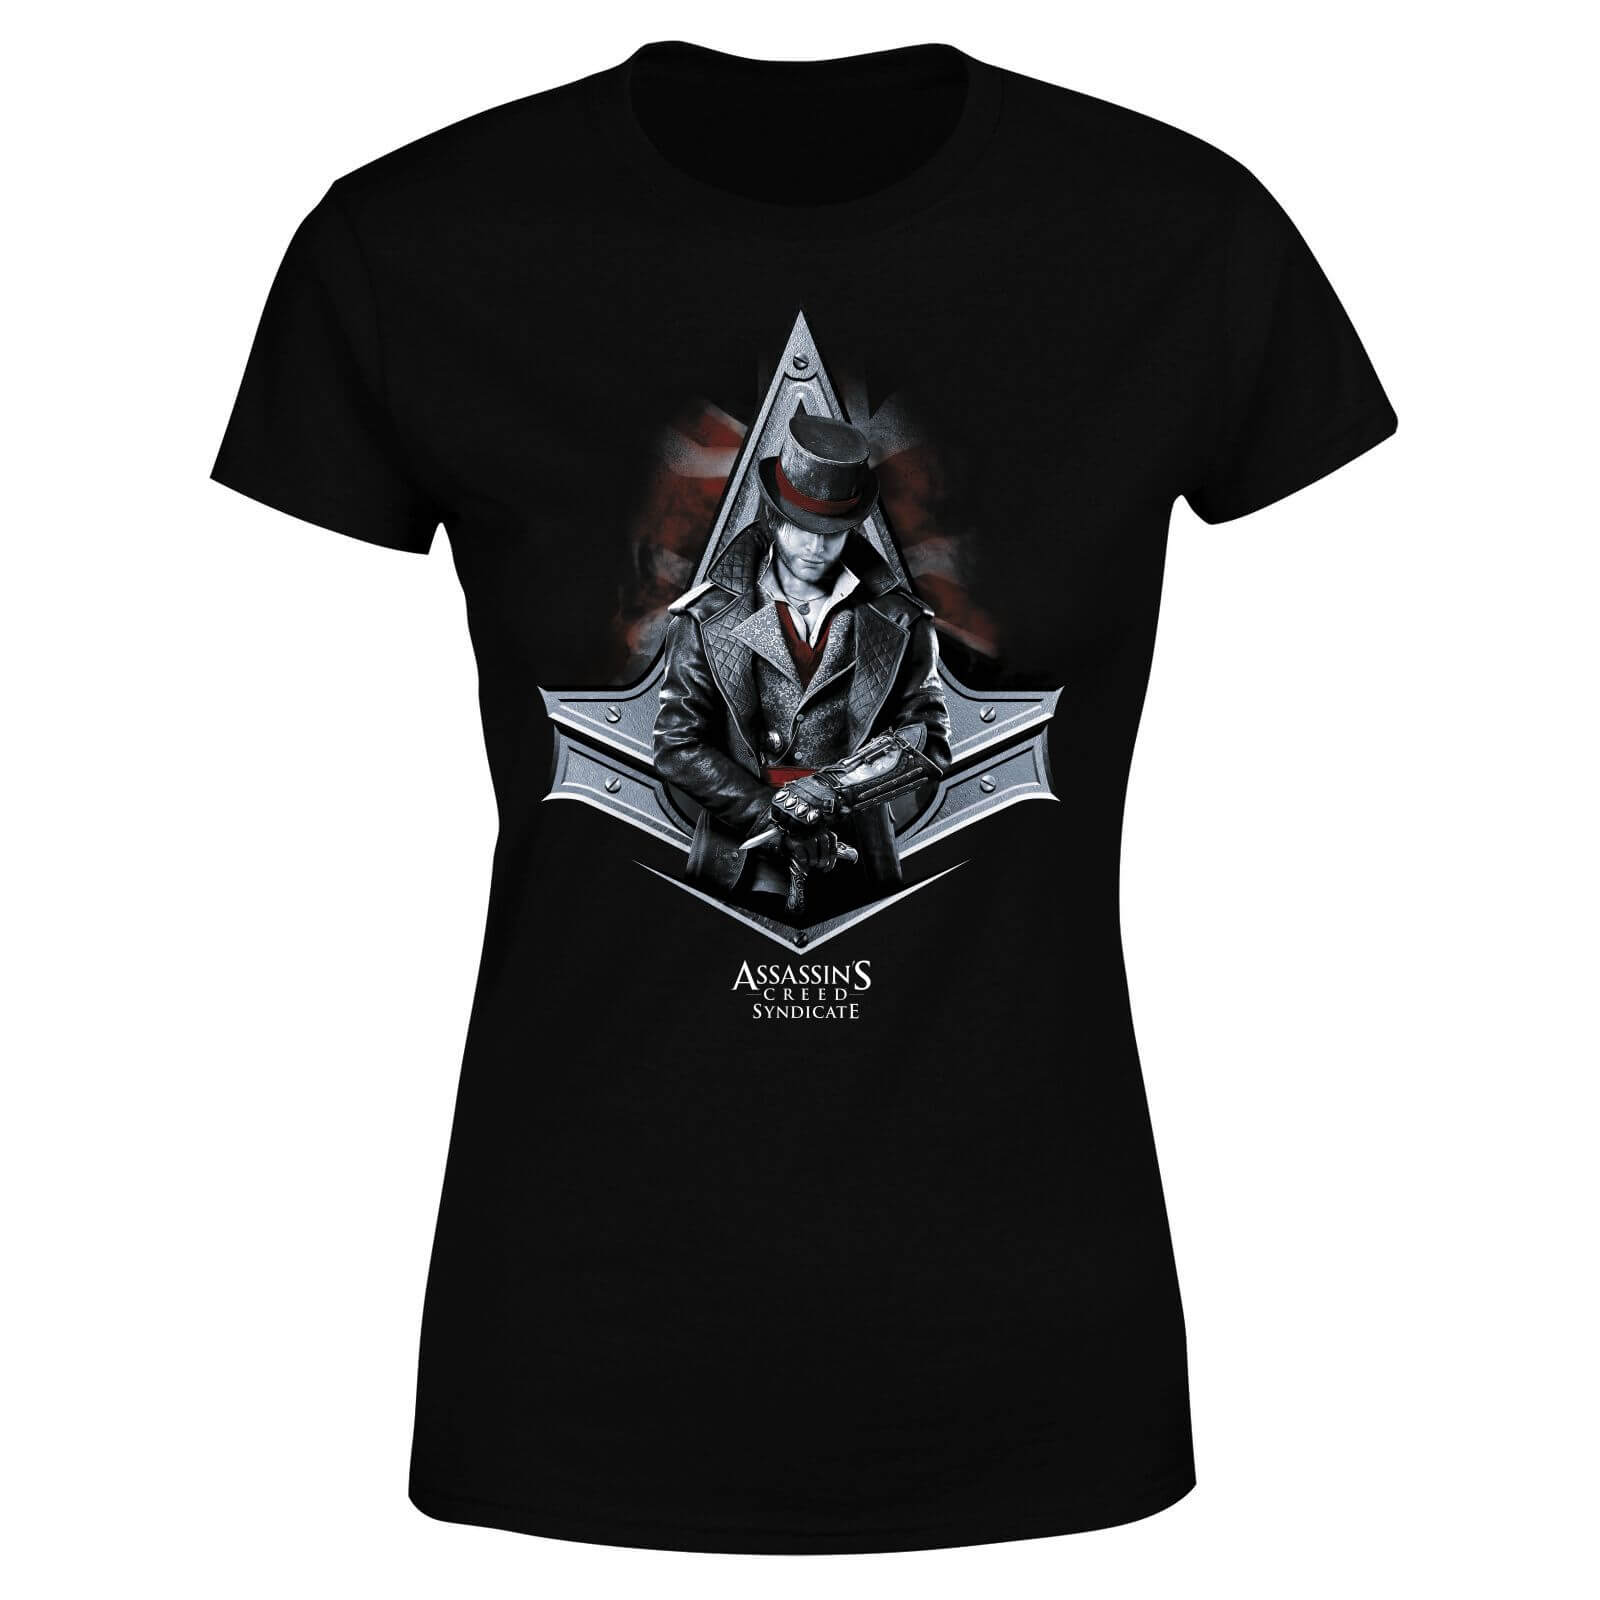 Assassin's Creed Syndicate Jacob Women's T-Shirt - Black - XL - Black